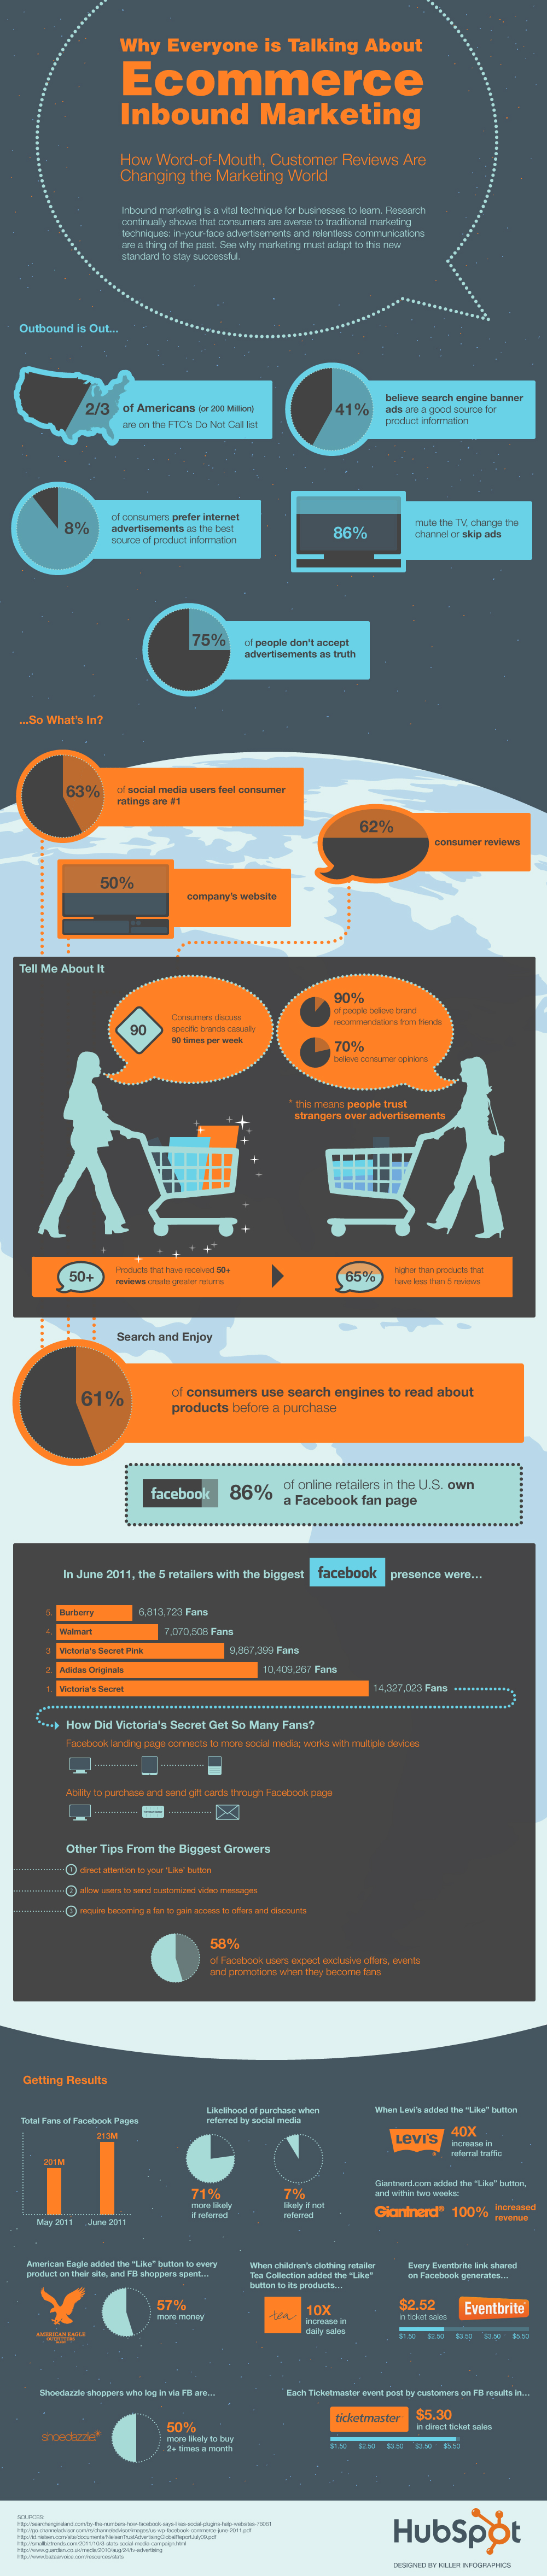 Ecommerce Inbound Marketing vs Outbound Marketing - Infographic